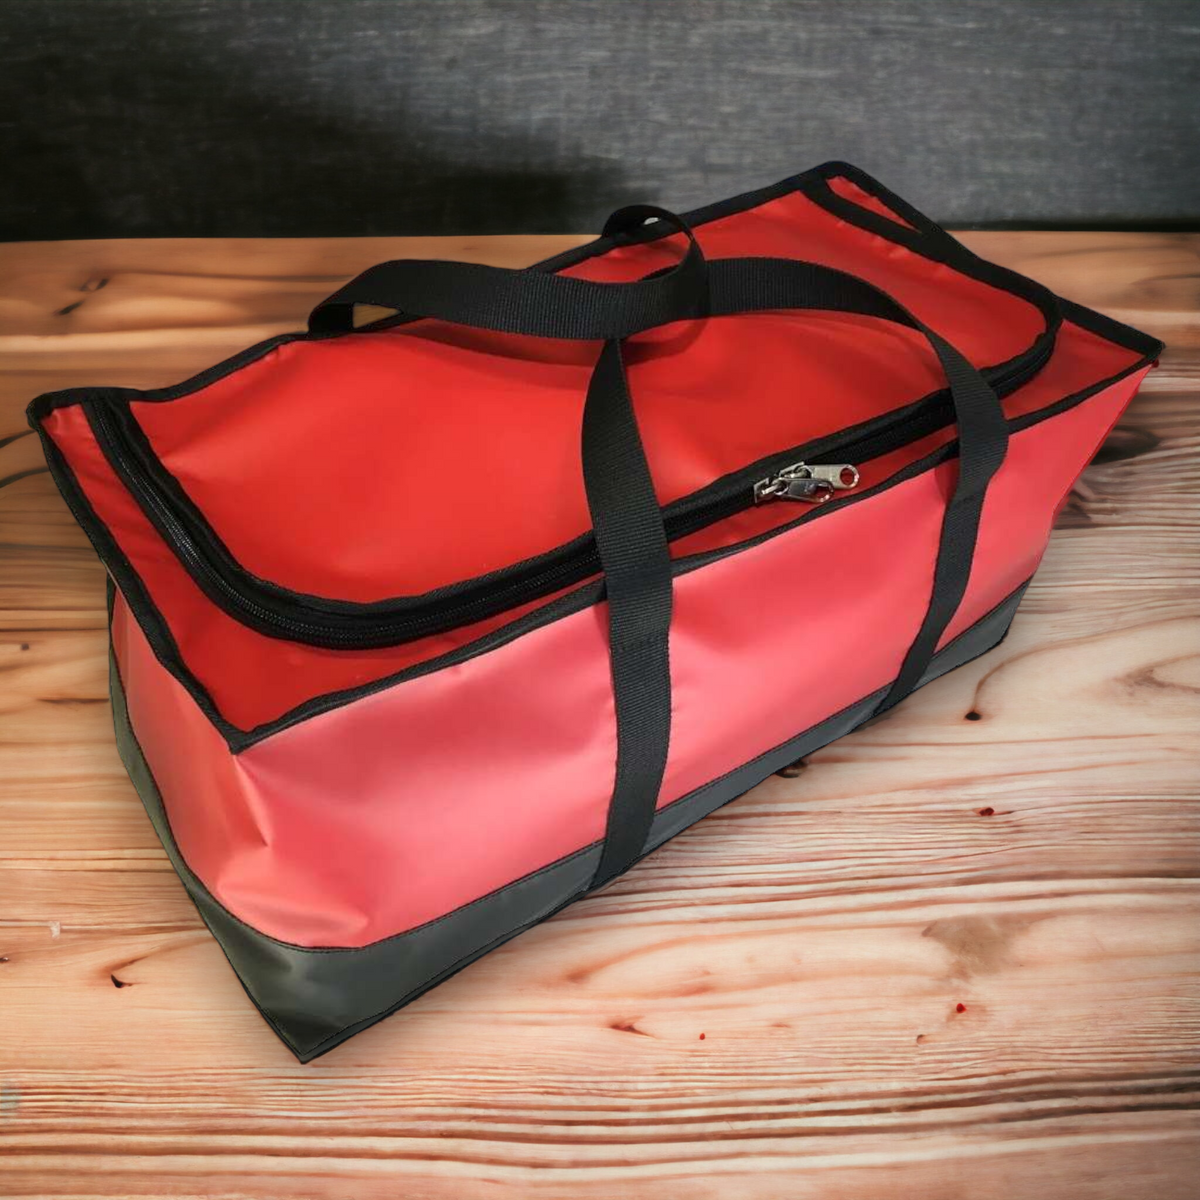 4x4 Adventure Bag with Full Zipper Open